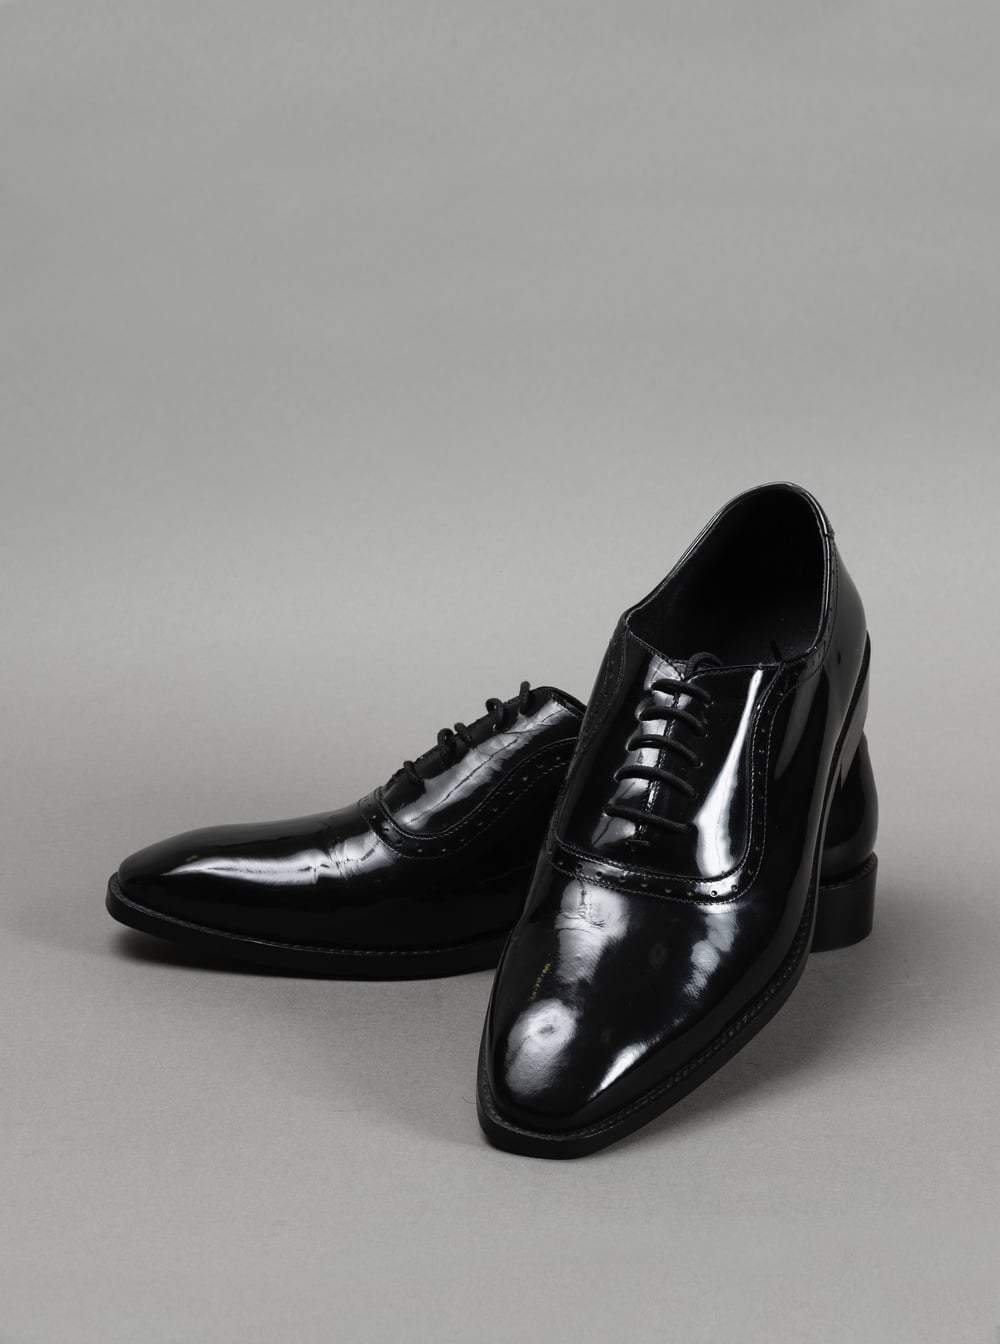 Black Patent Leather Bespoke Shoe